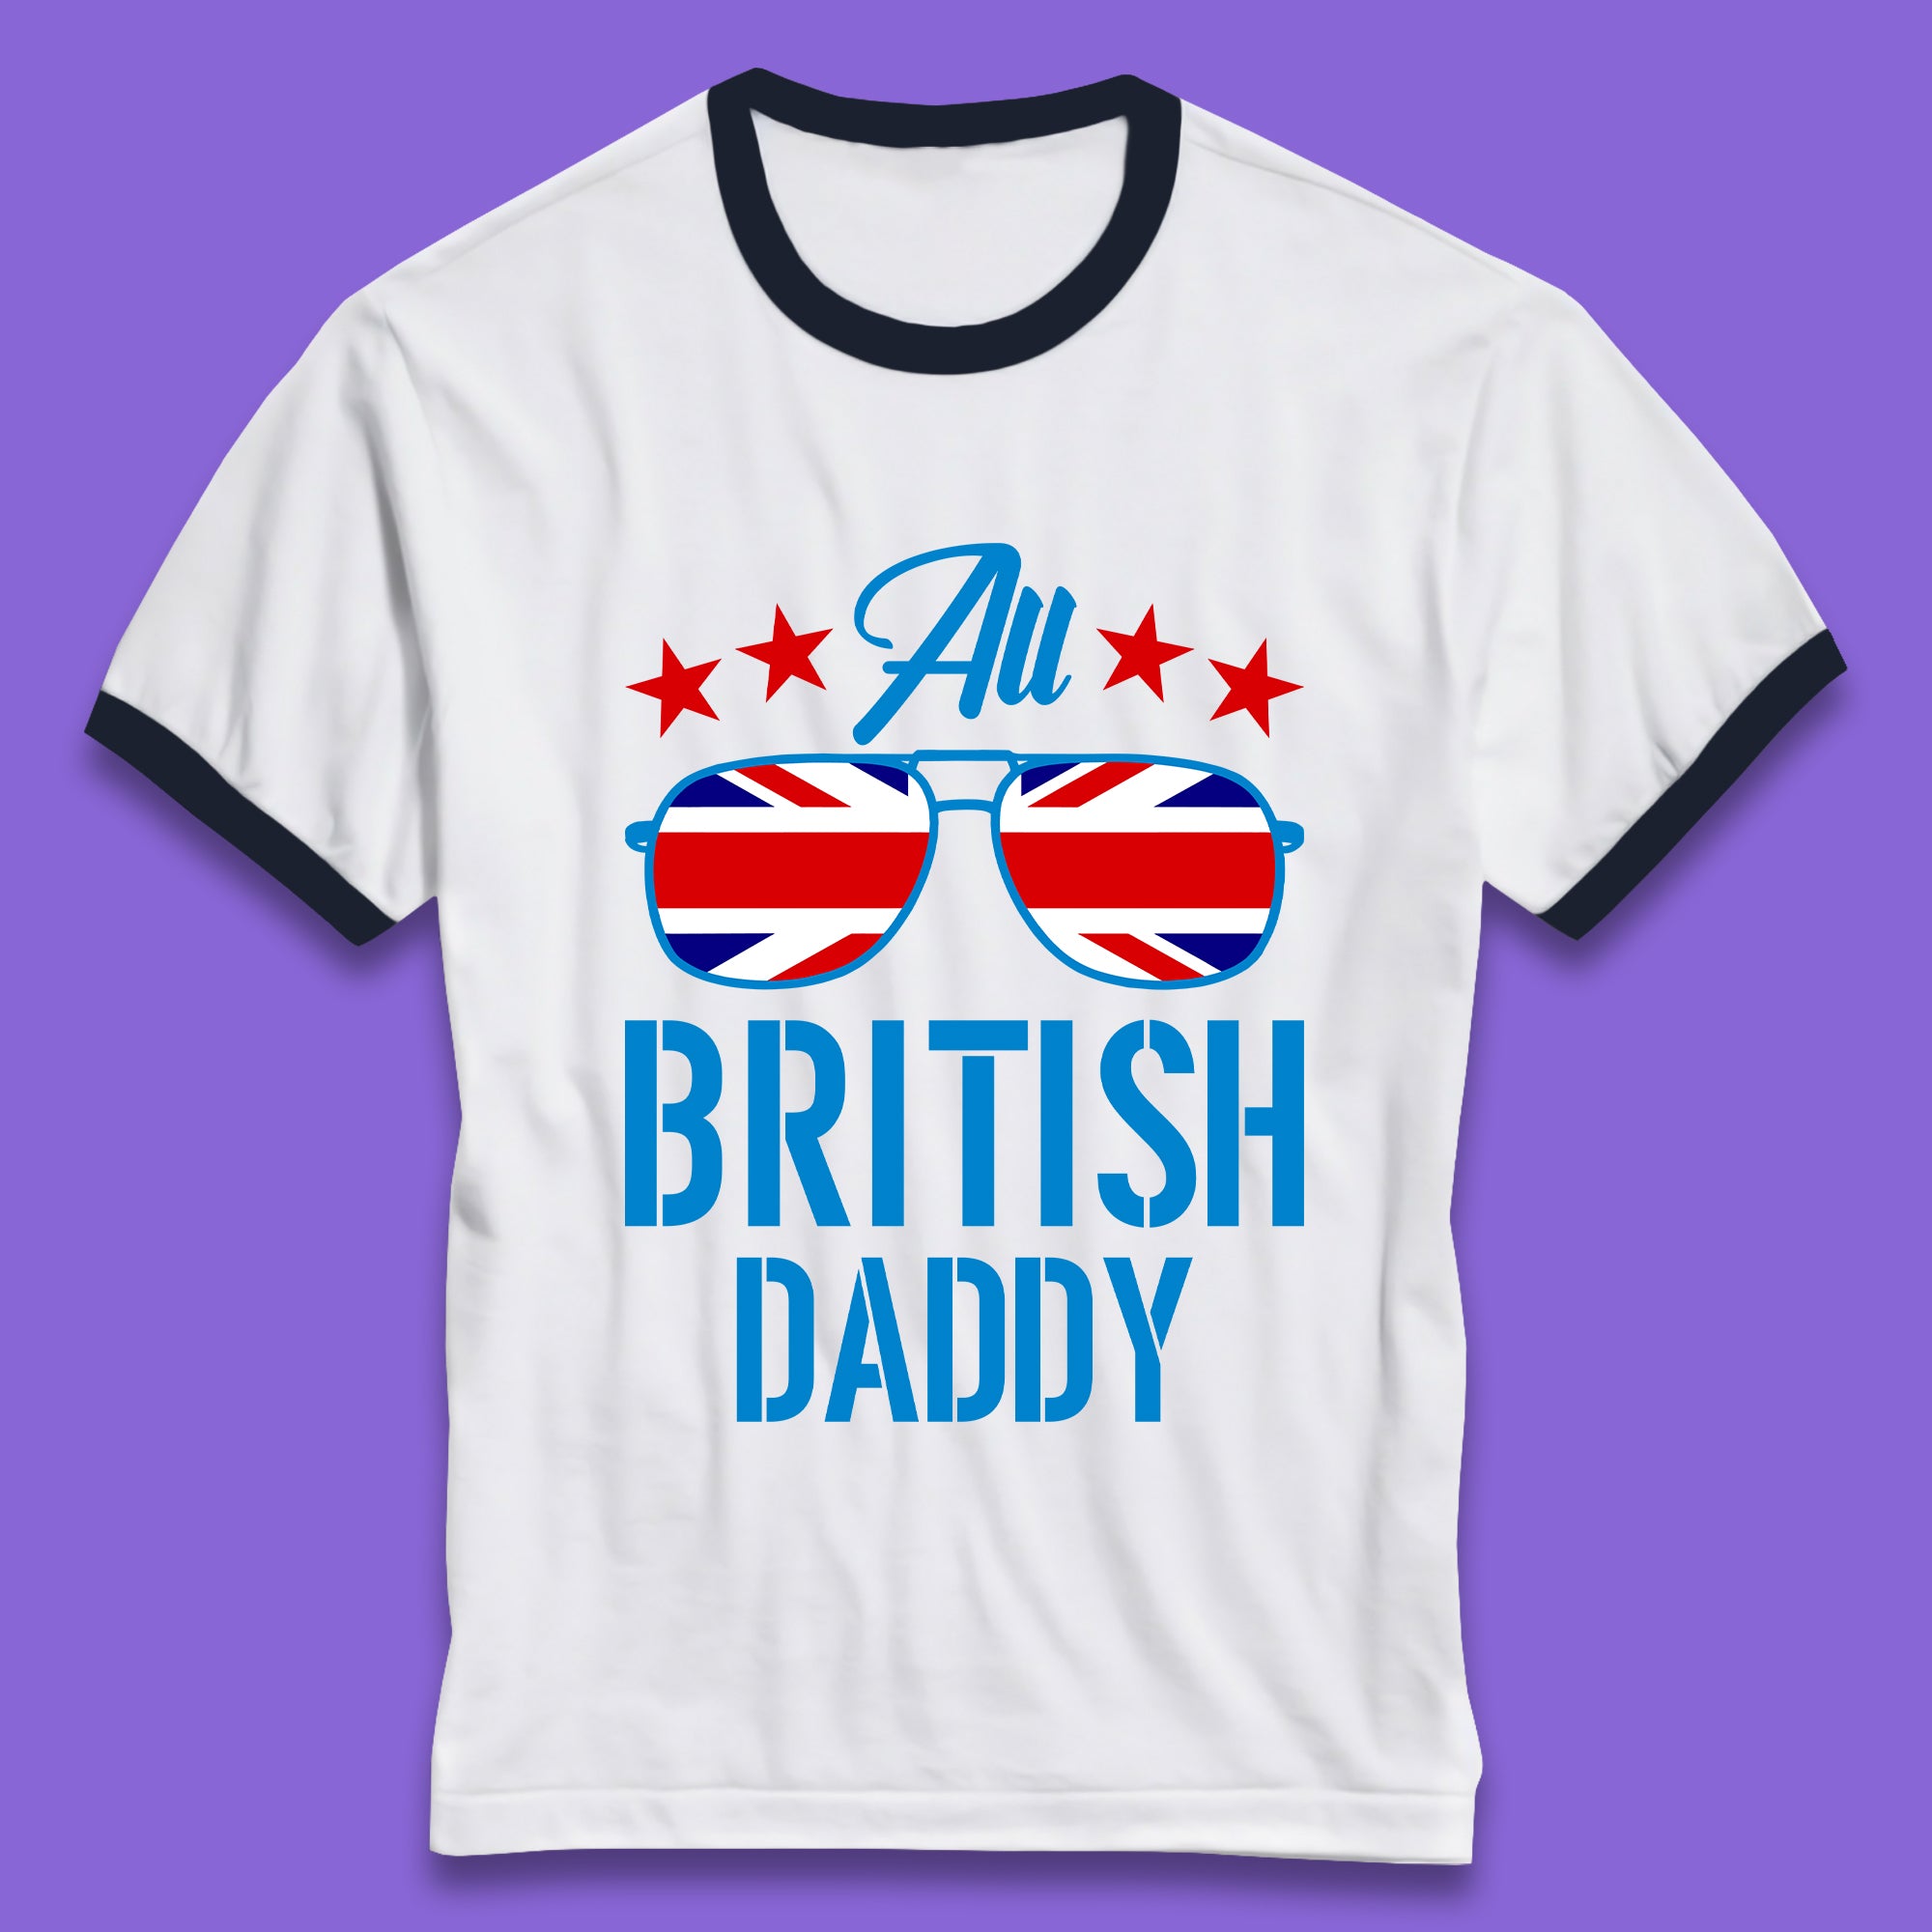 British Daddy Ringer T-Shirt